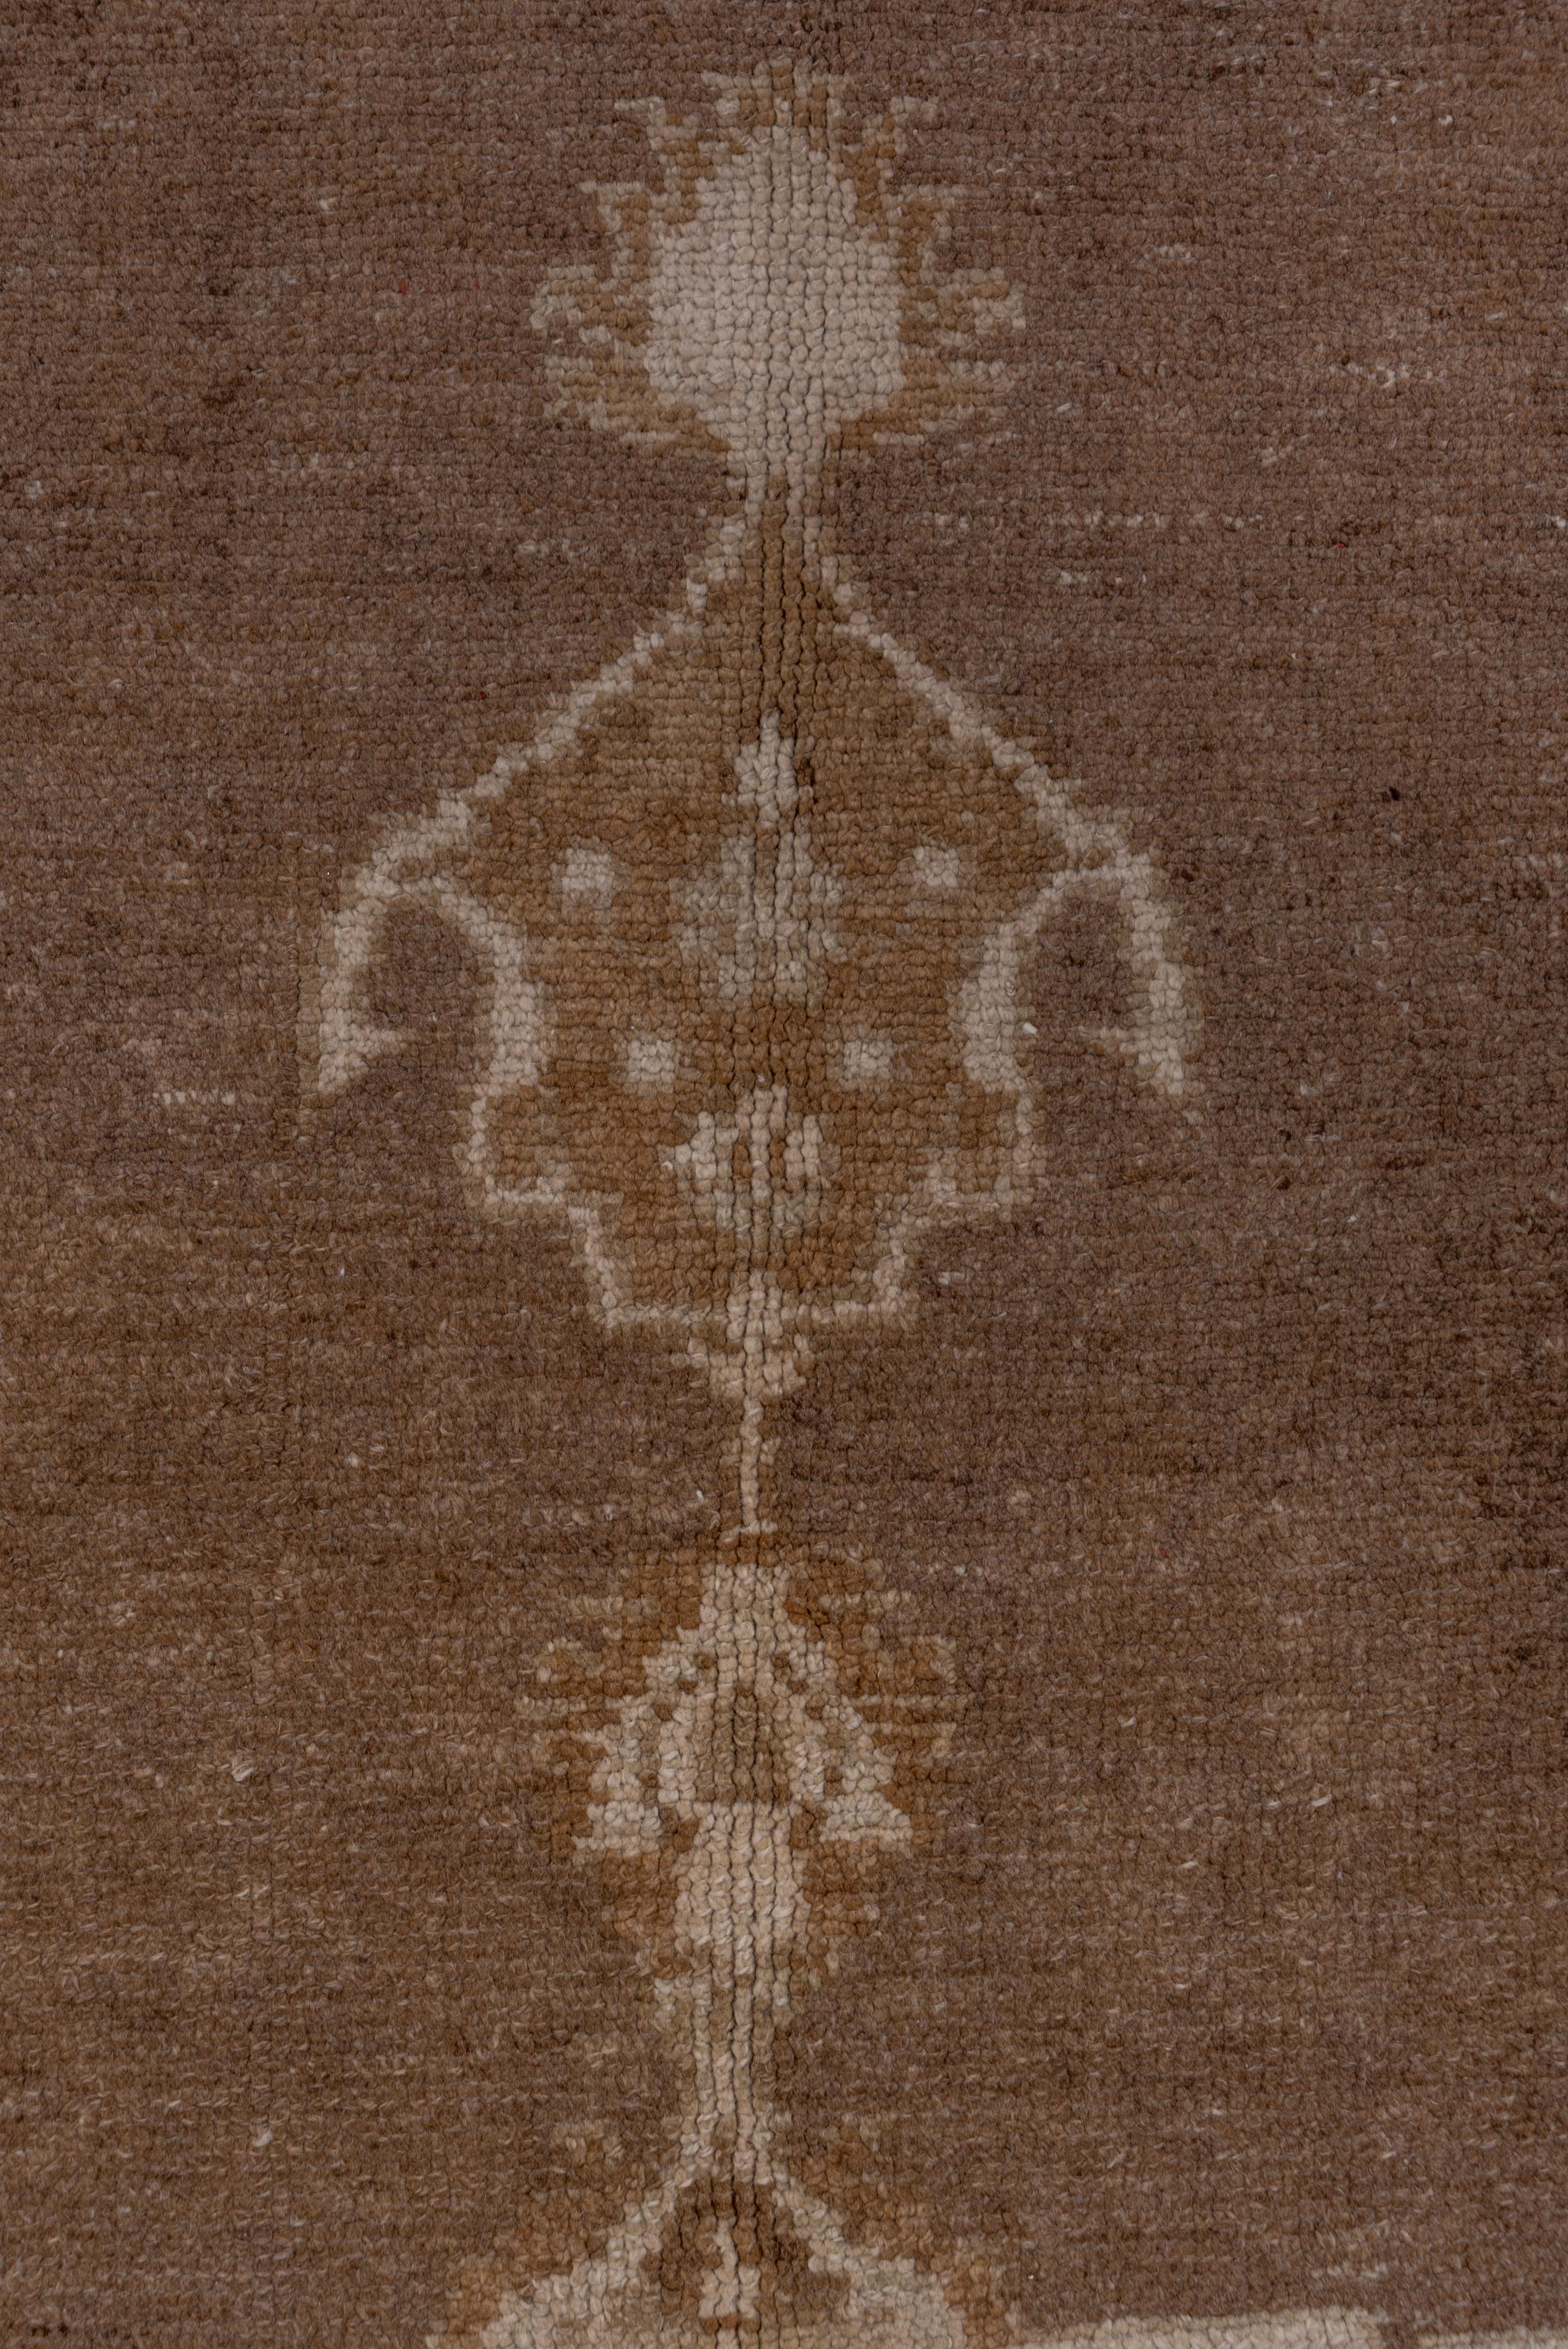 Antique Turkish Oushak Carpet, Brown Field, Light Brown Borders, Circa 1930s For Sale 5